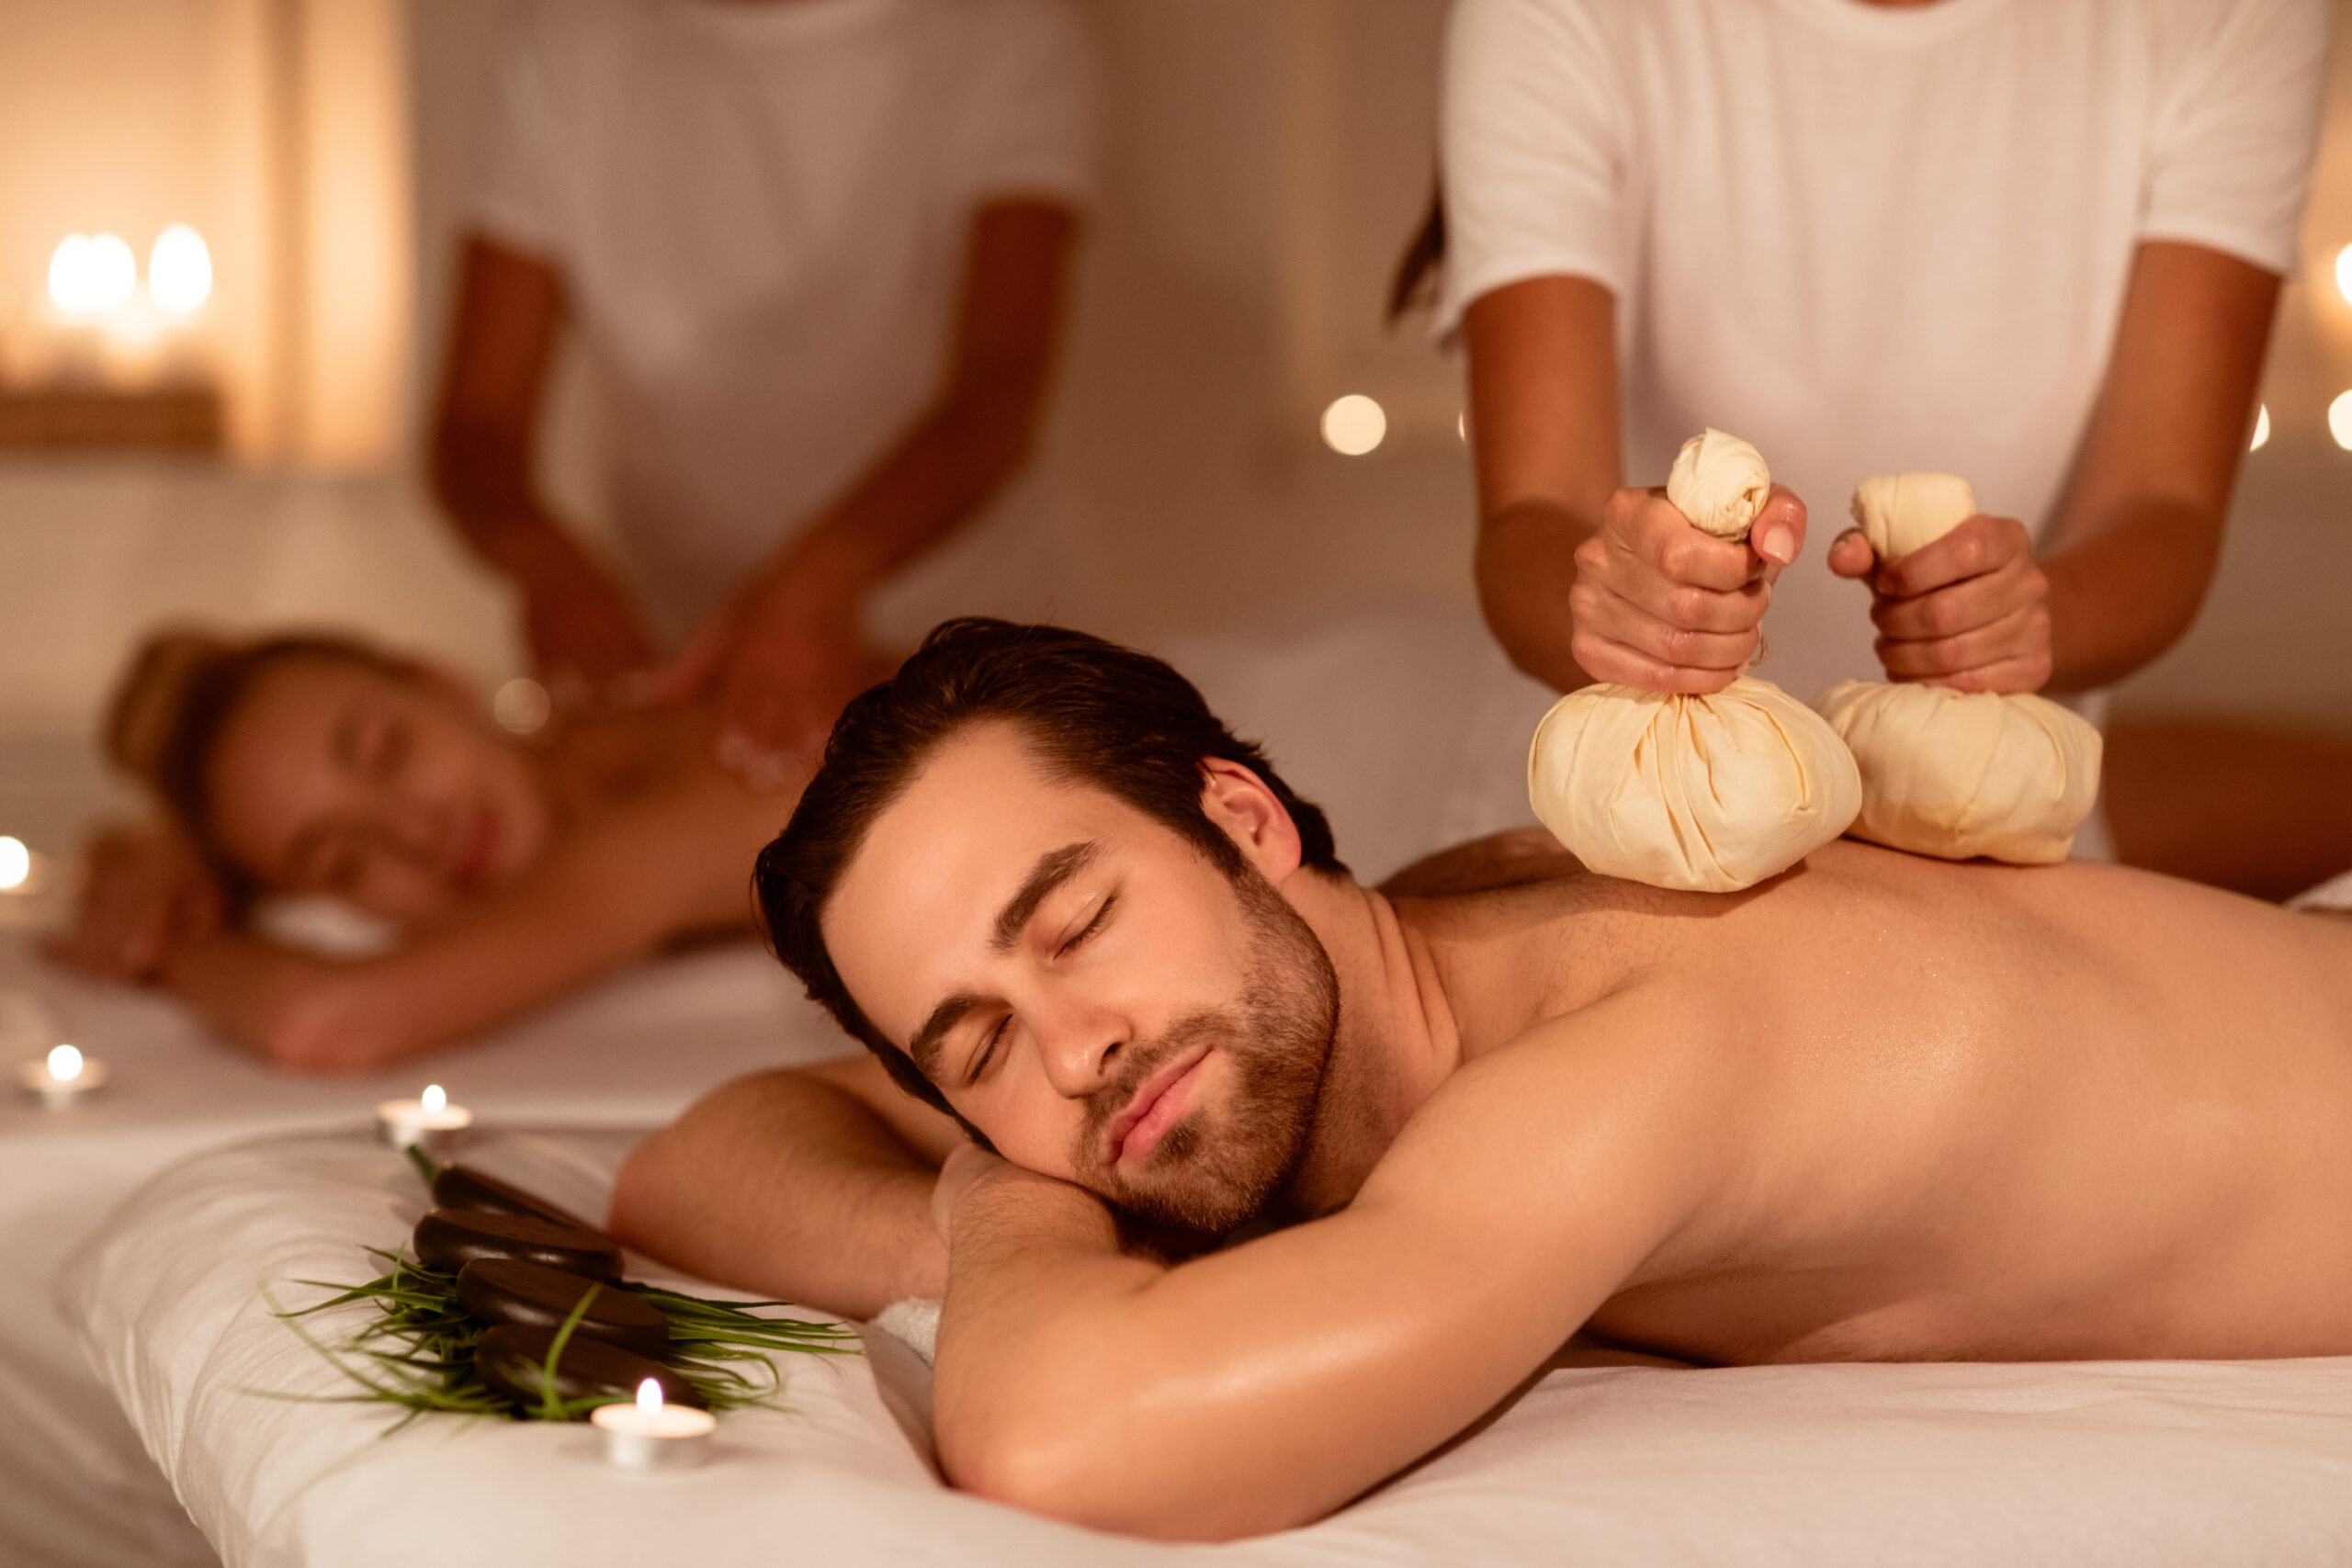 Real Thai Massage Video classic handjob